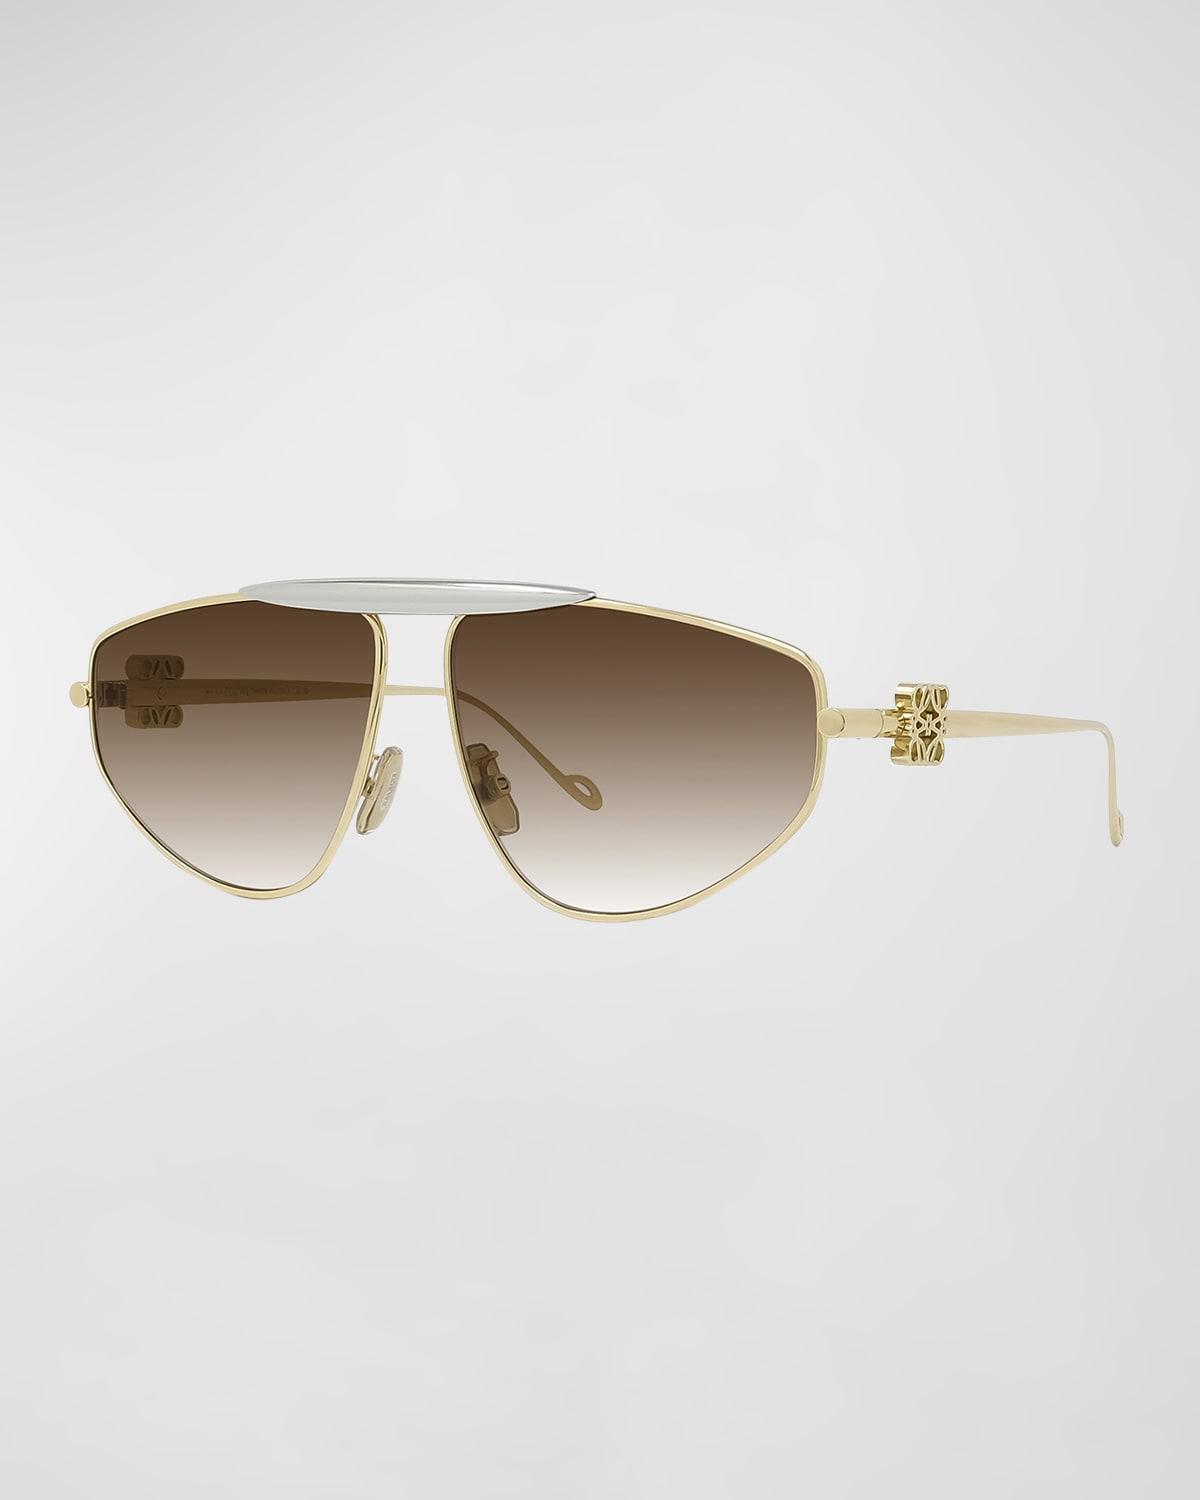 Loewe Anagram 61mm Pilot Sunglasses Product Image